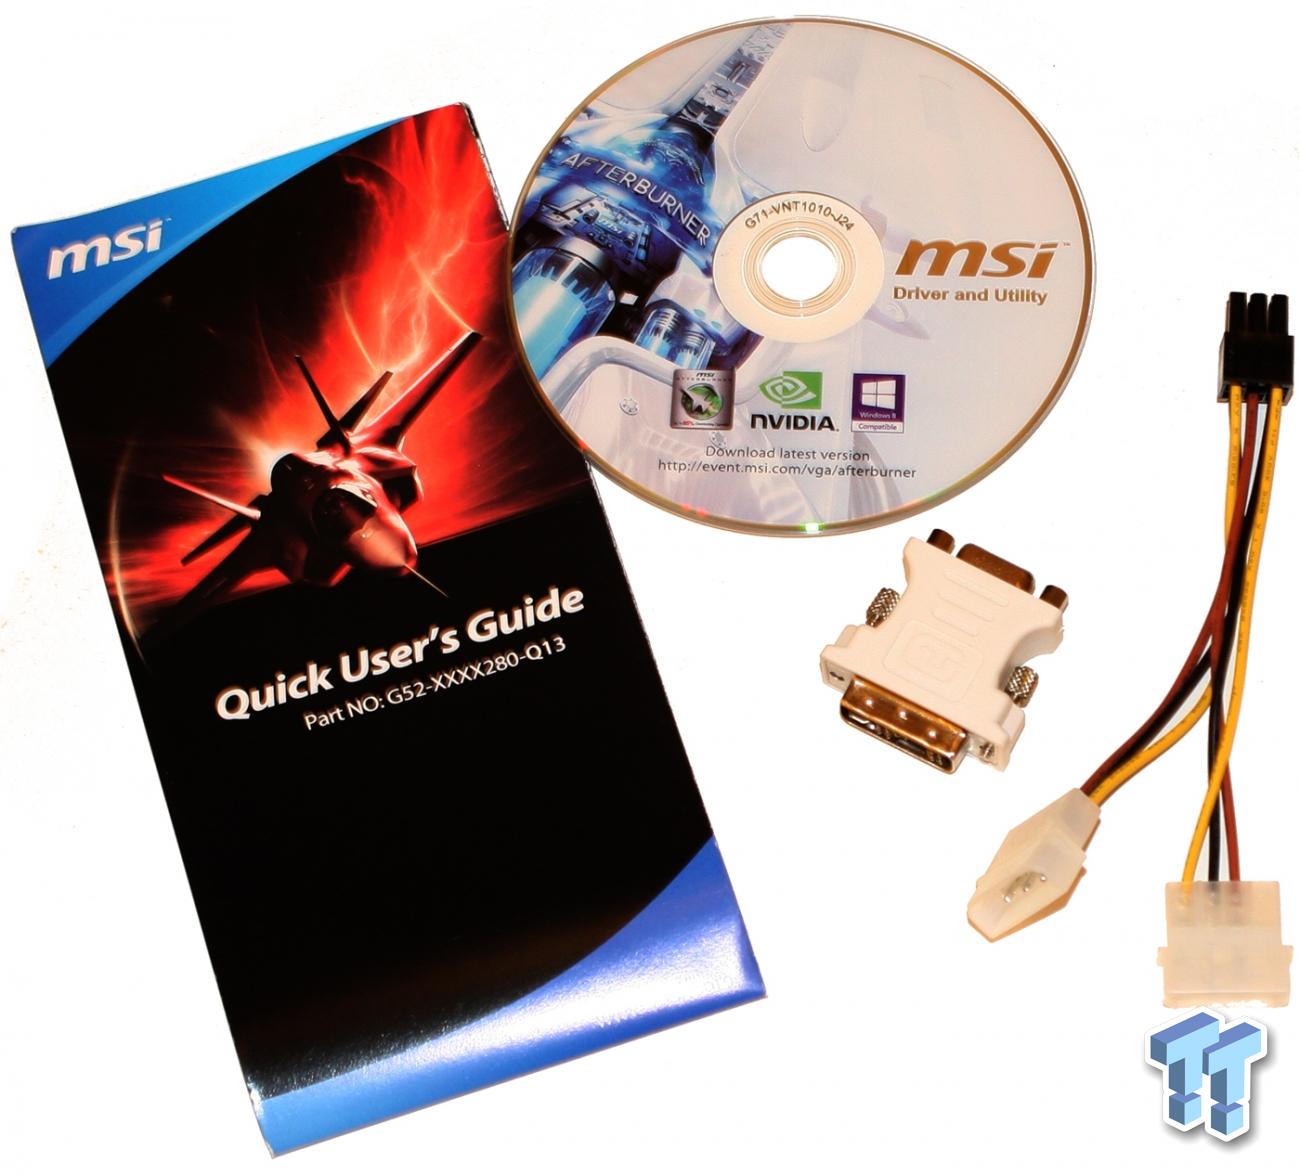 Msi Geforce Gtx 650 Ti 2gb Boost Twin Frozr Gaming Overclocked Video Card Review Tweaktown